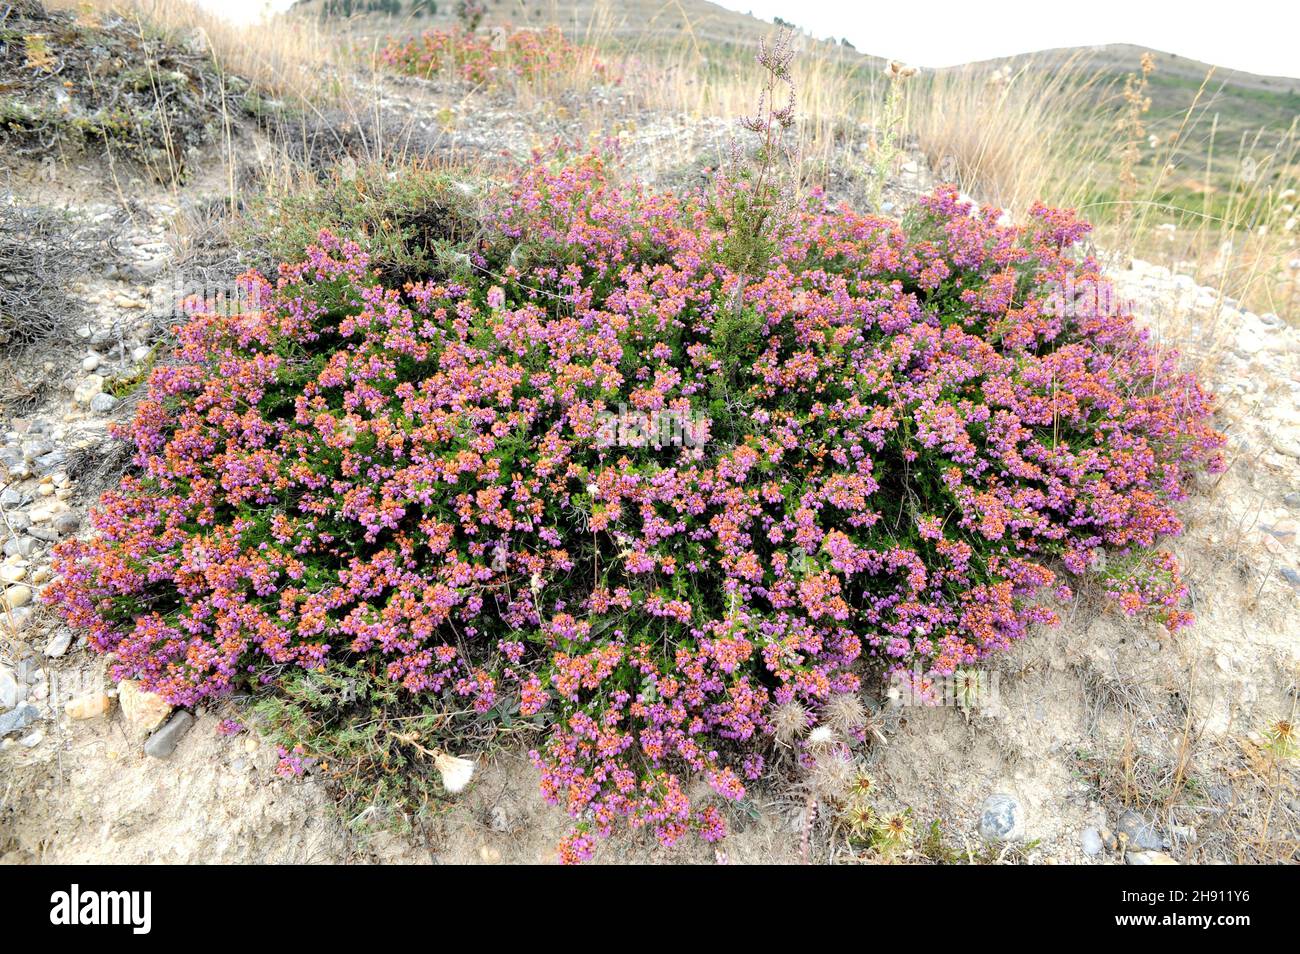 Cornish heath (Erica vagans) is a subshrub native to western Europe. This photo was taken in Burgos, Castilla y Leon, Spain. Stock Photo